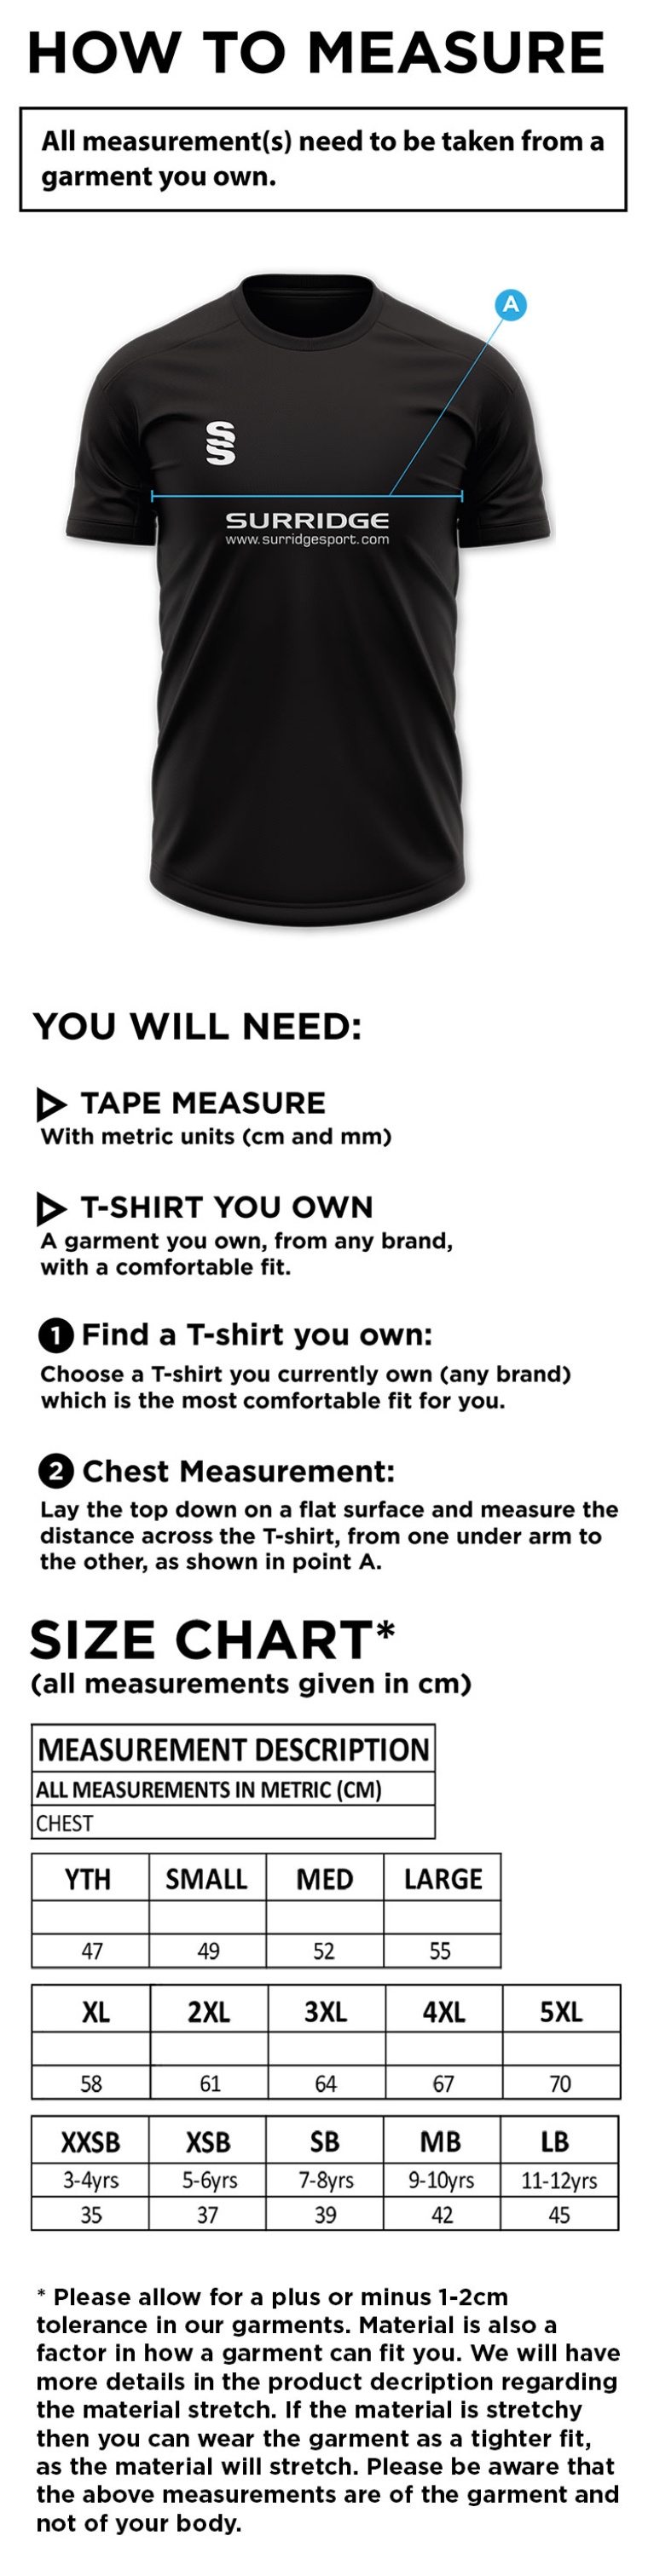 Byfleet CC COLTS Blade Polo Shirt - Size Guide